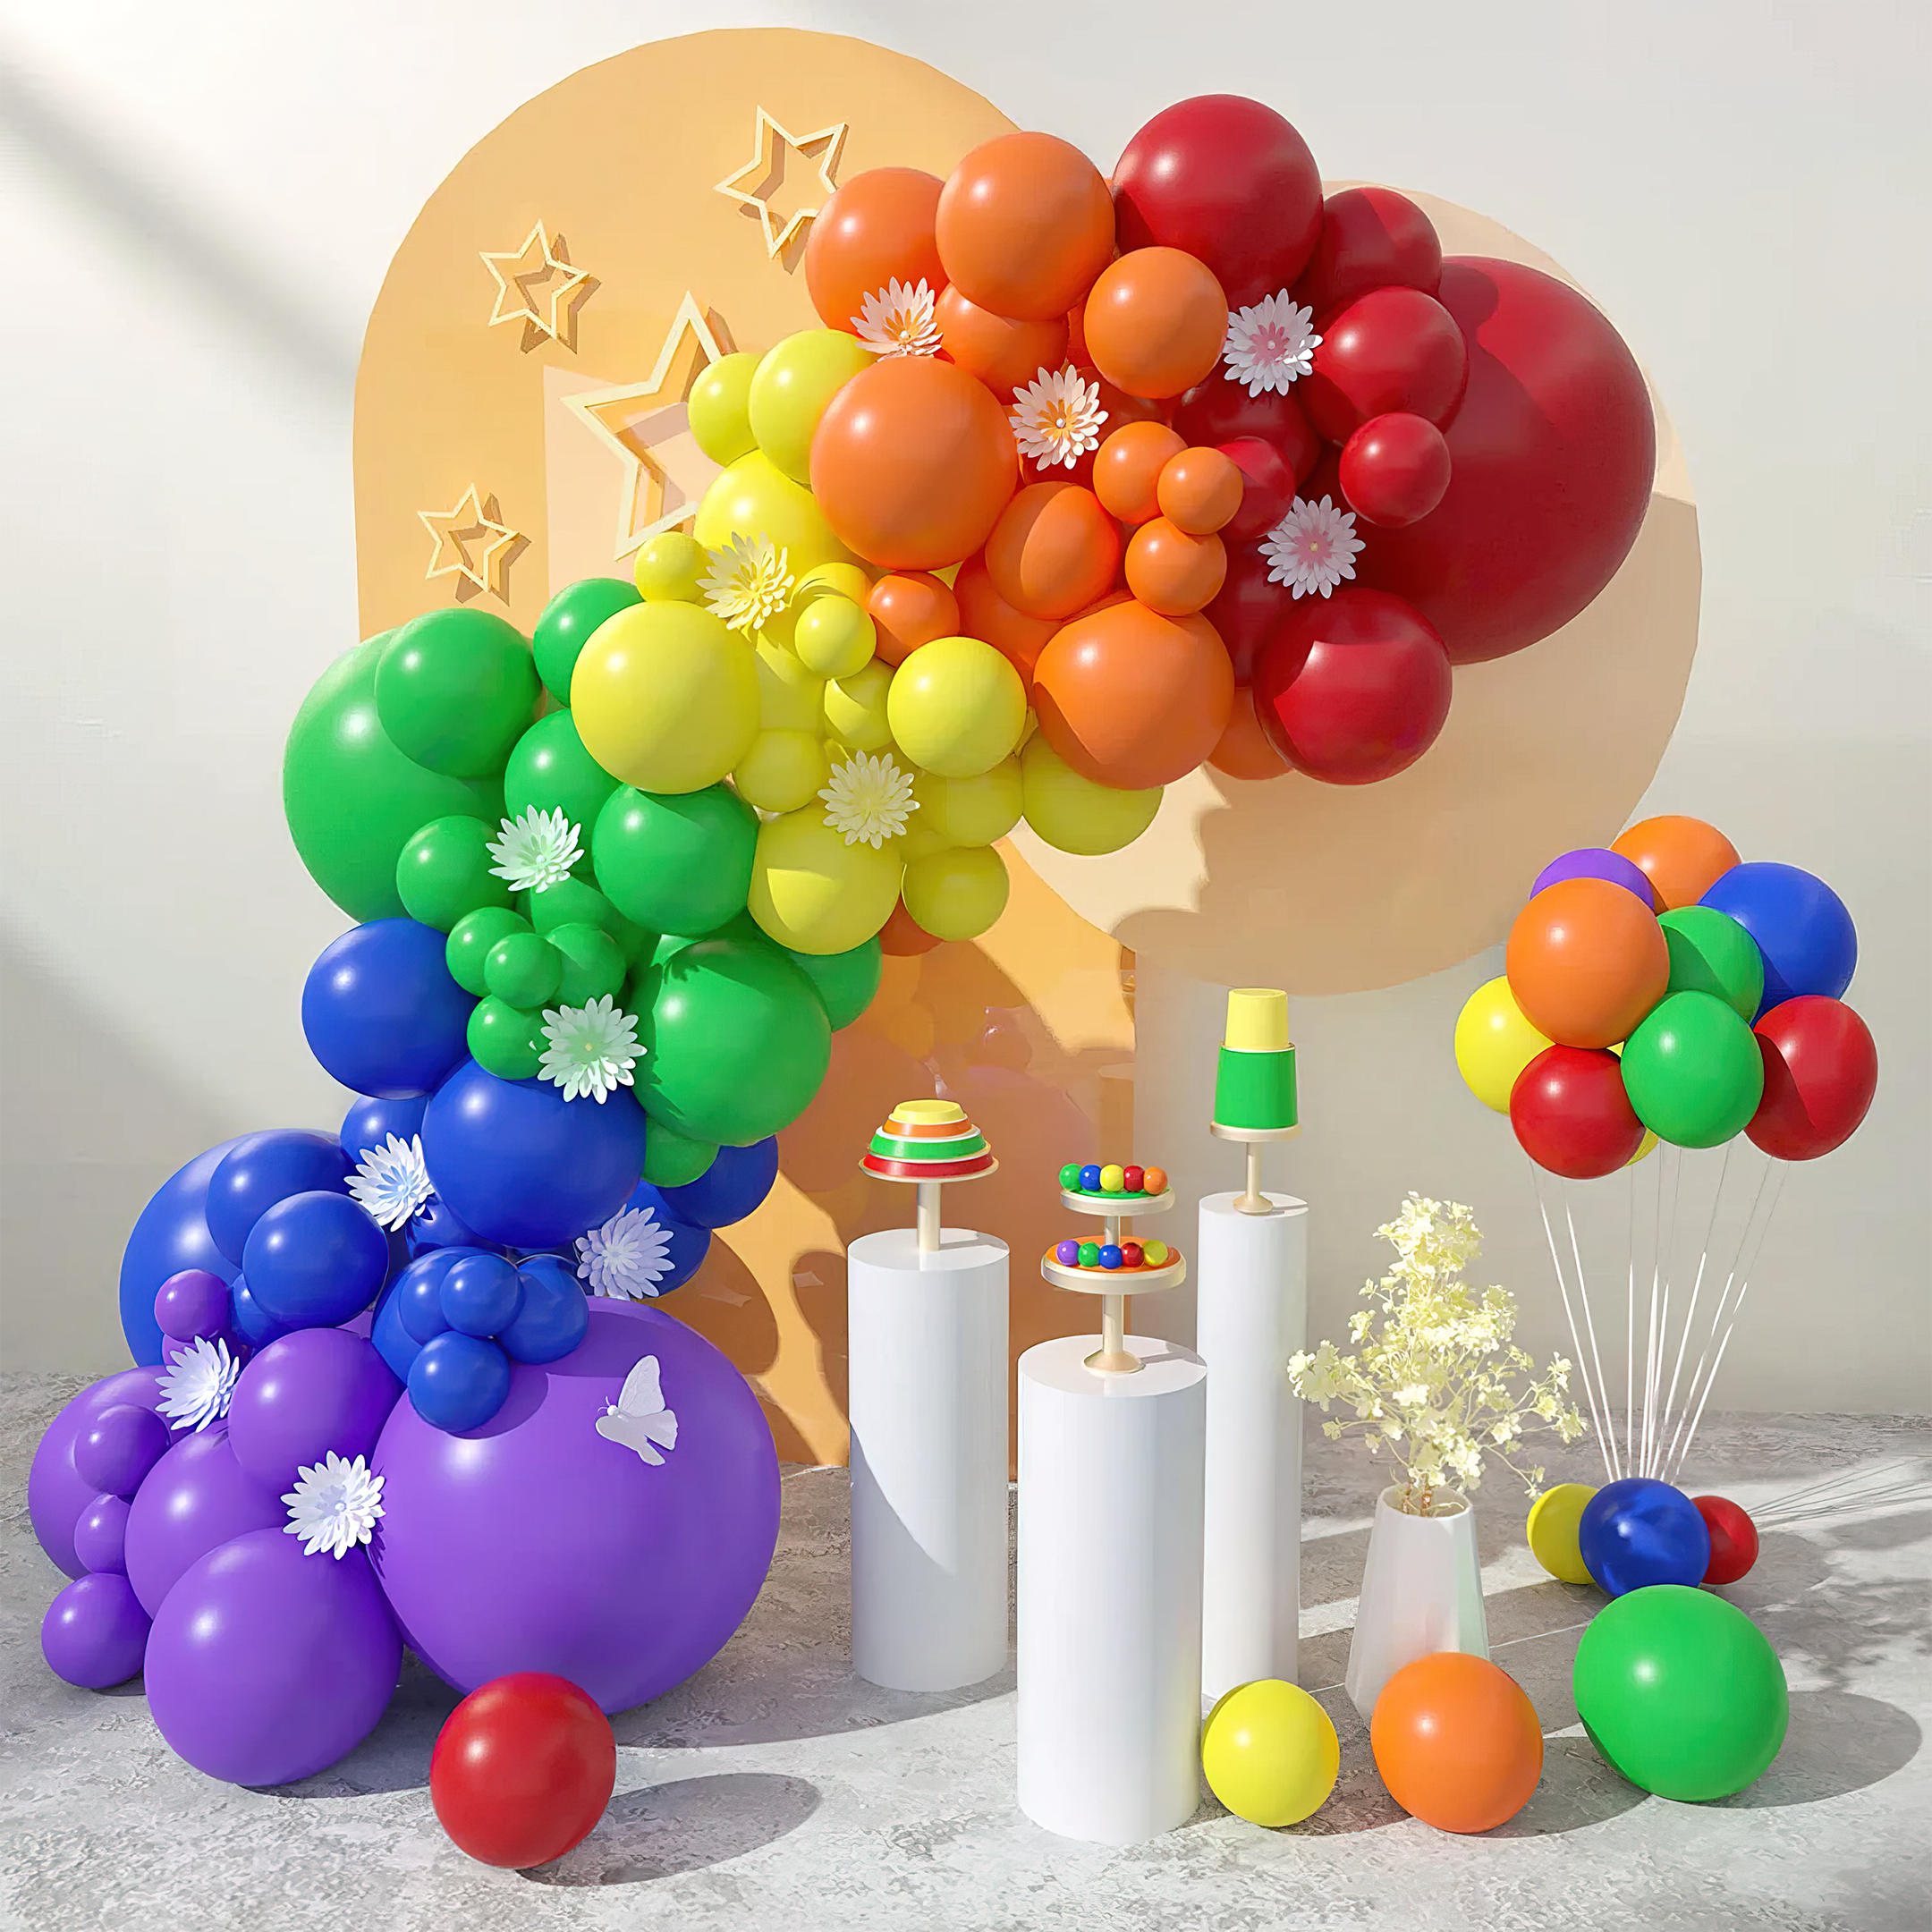 Rainbow Theme Balloons for decoration-50pcs